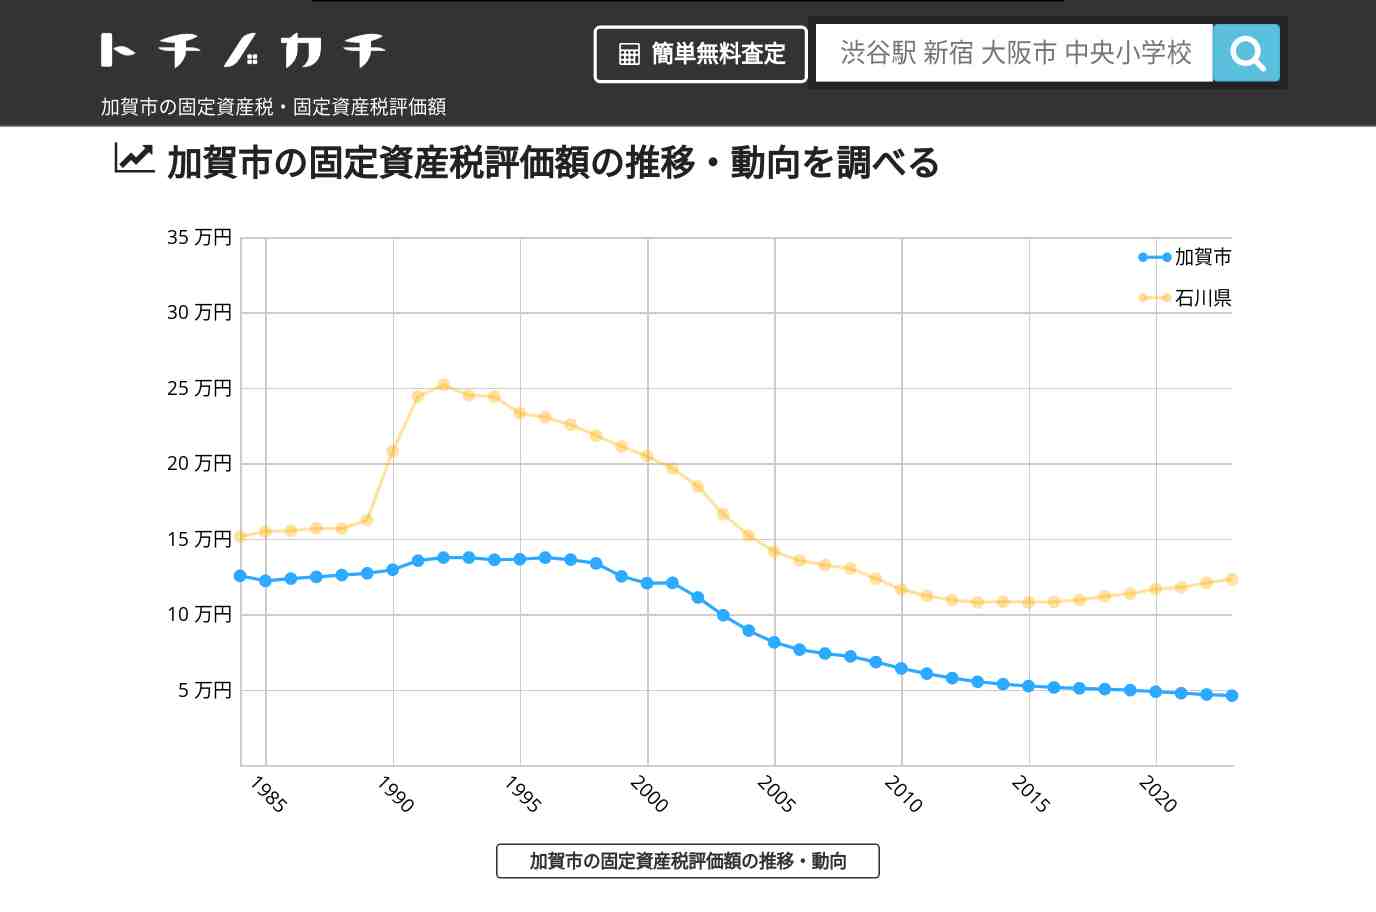 庄小学校(石川県 加賀市)周辺の固定資産税・固定資産税評価額 | トチノカチ